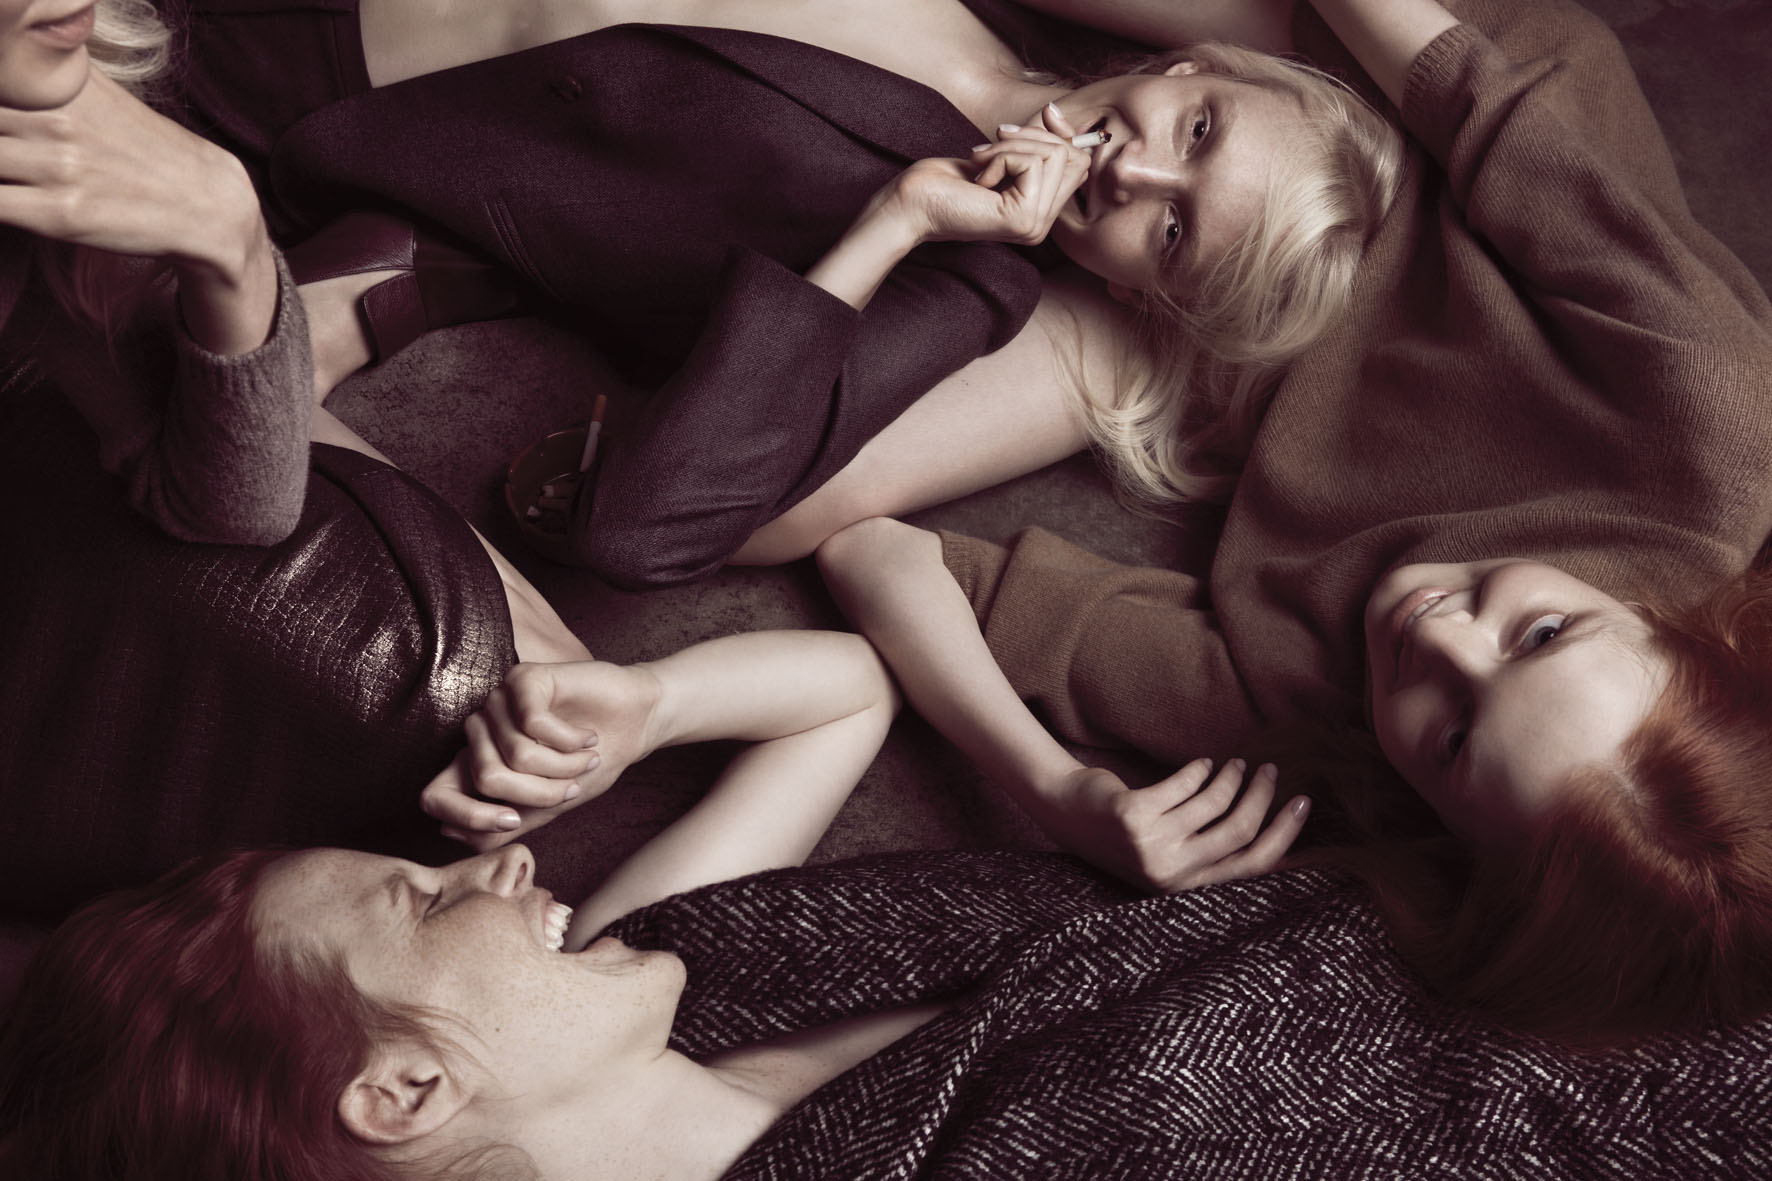 Vogue Italia August 2014 “Just Smile!” | Camilla Akrans | Gucci | Vogue Italia | Vittoria Cerciello | Numerique Retouch Photo Retouching Studio